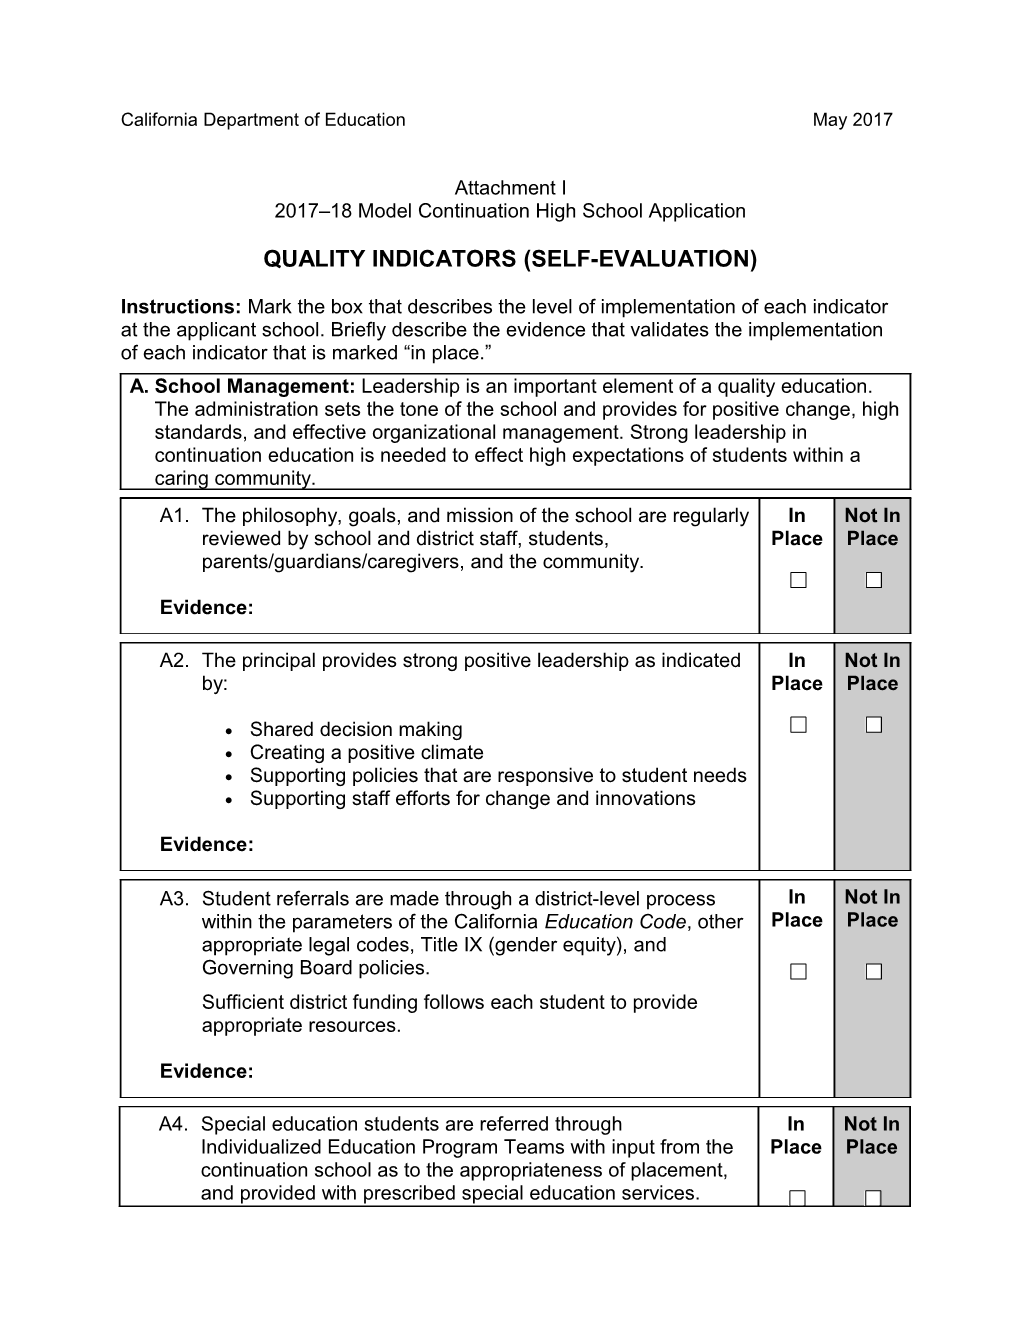 MCHS App Attachment I - Model Continuation High School Recognition Program (CA Dept Of